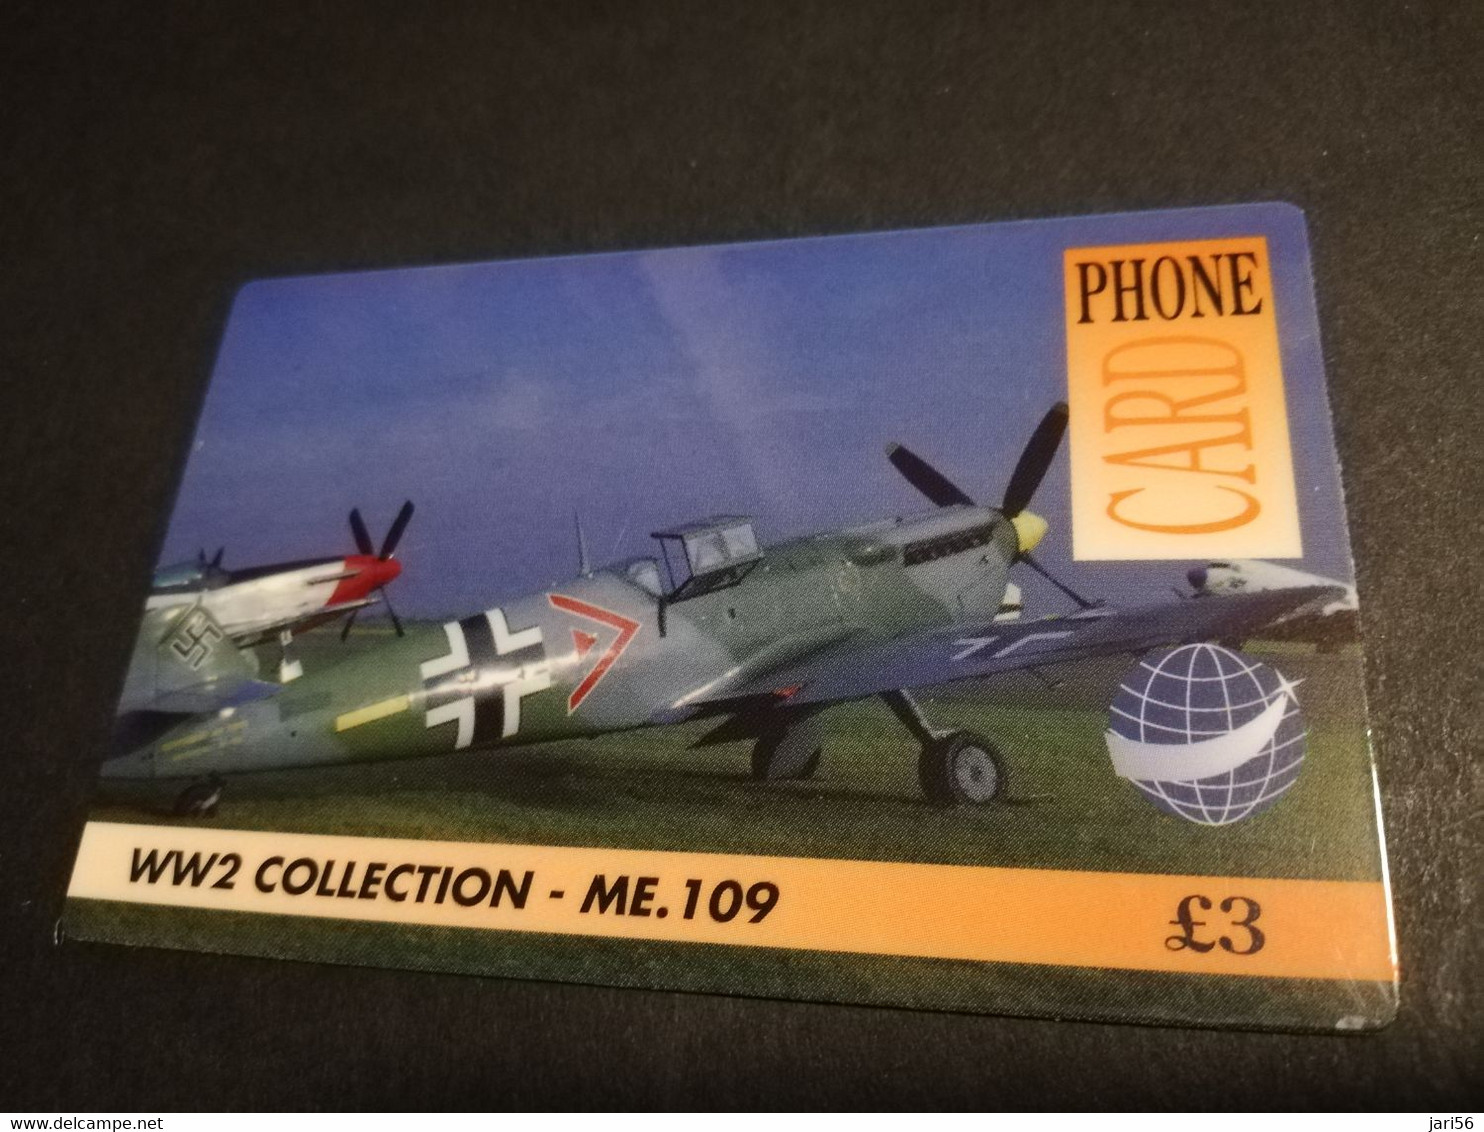 GREAT BRITAIN   3 POUND  AIR PLANES  ME-109   DIT PHONECARD    PREPAID CARD      **5916** - [10] Colecciones